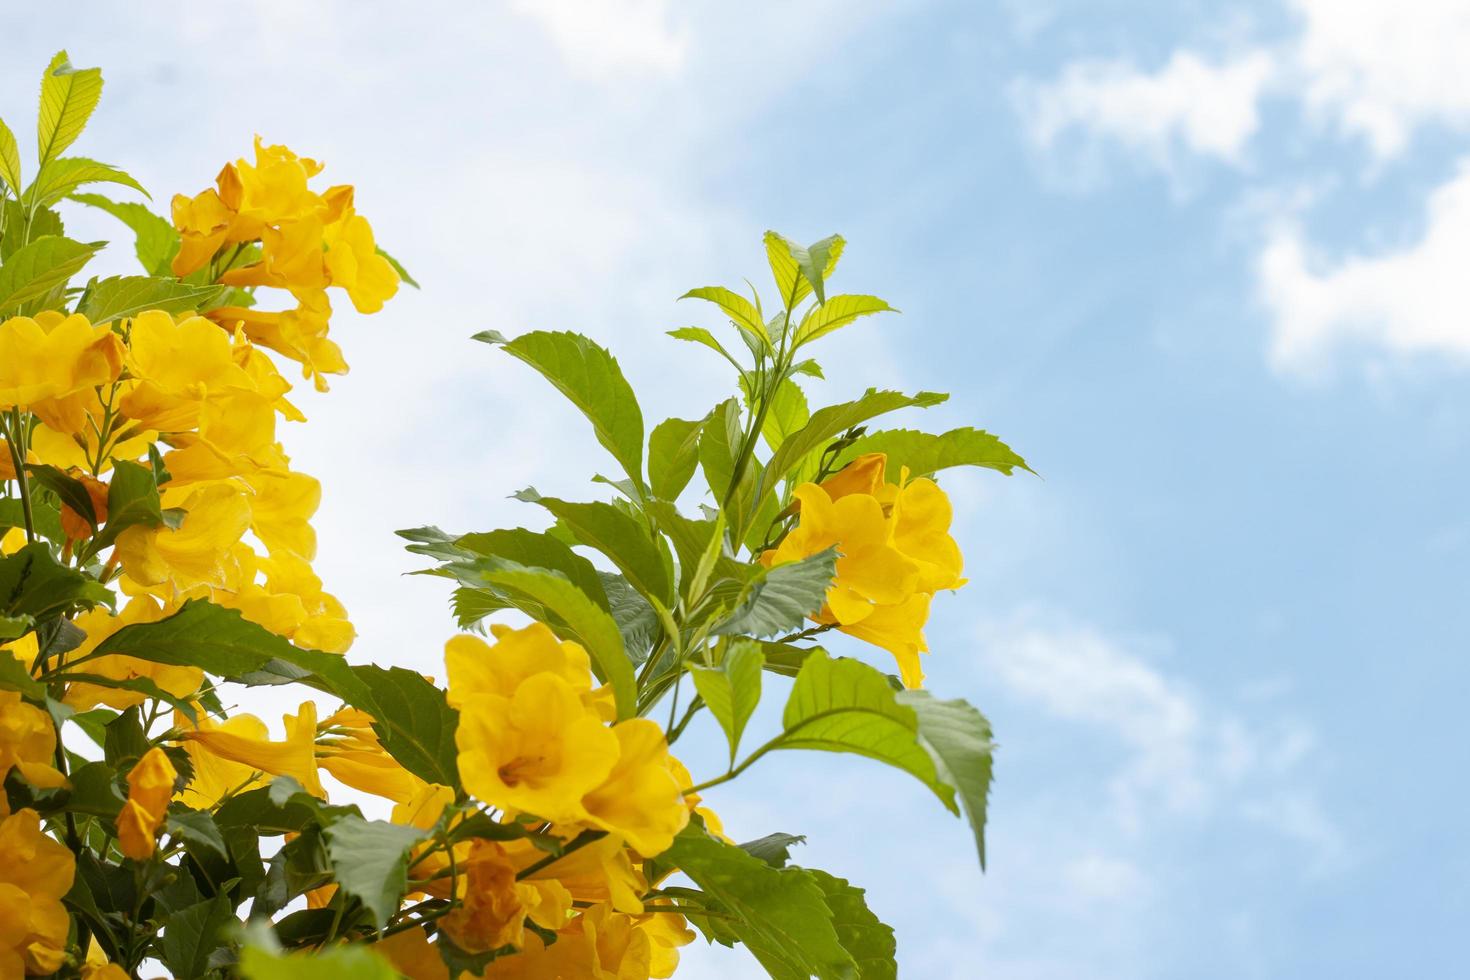 ancião amarelo, trumpetbush, trumpetflower no fundo do céu brilhante. foto